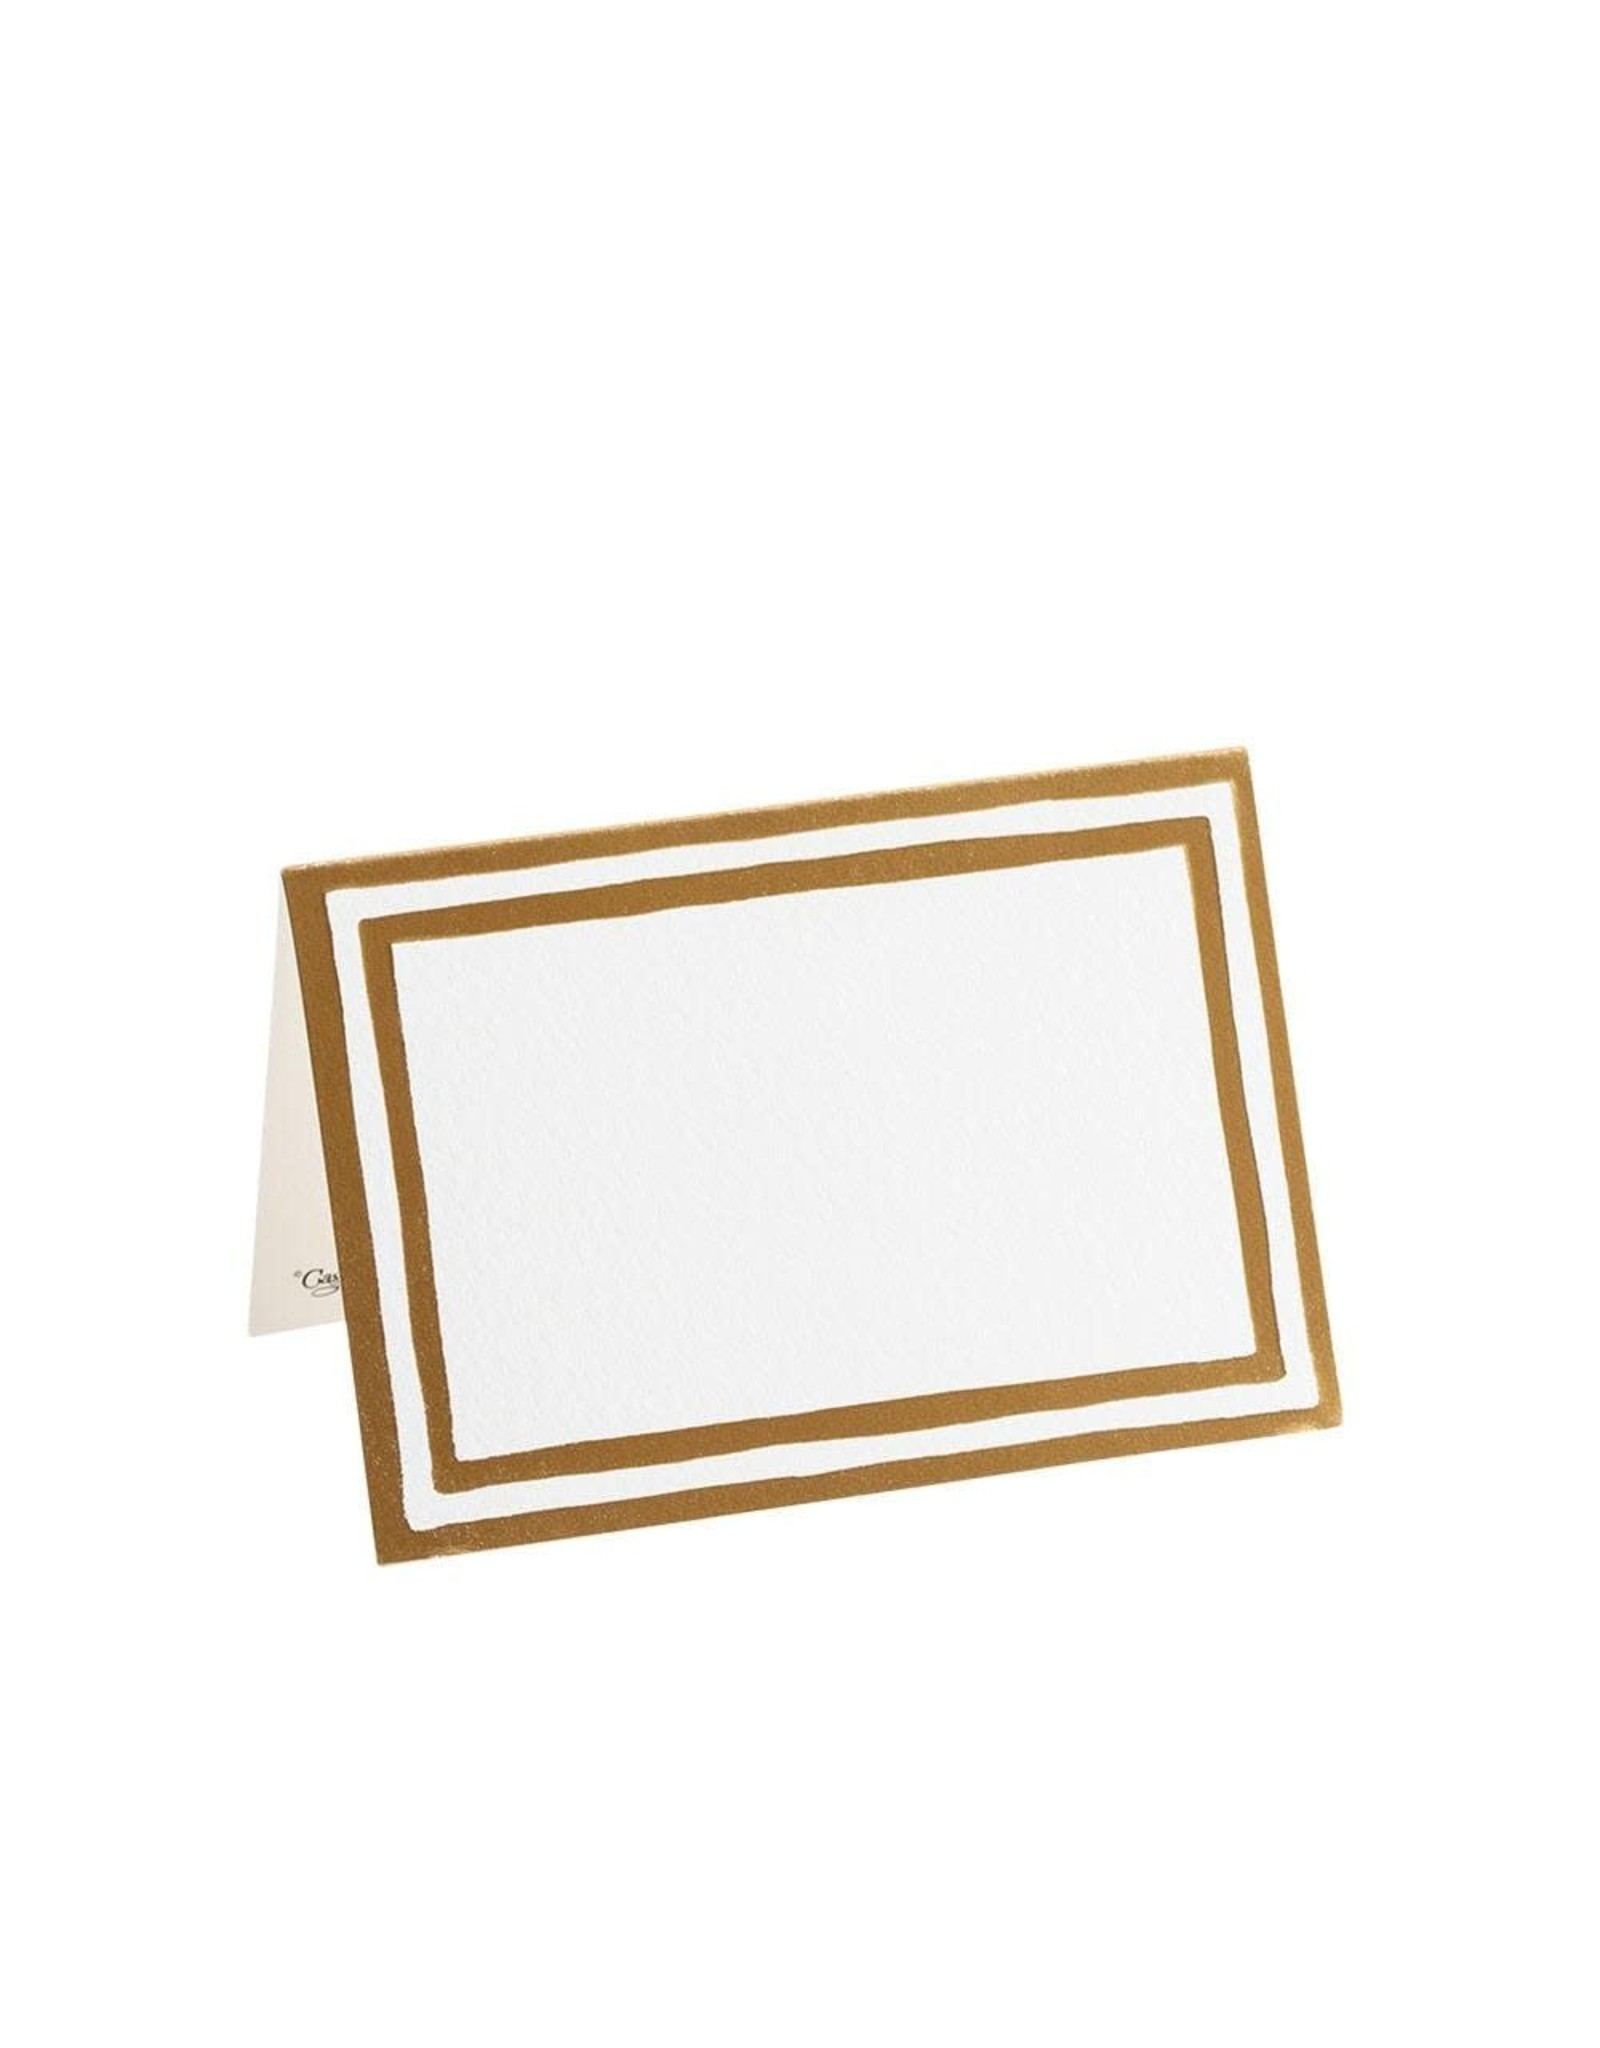 Caspari Table Place Cards 8pk Stripe Border Gold Foil